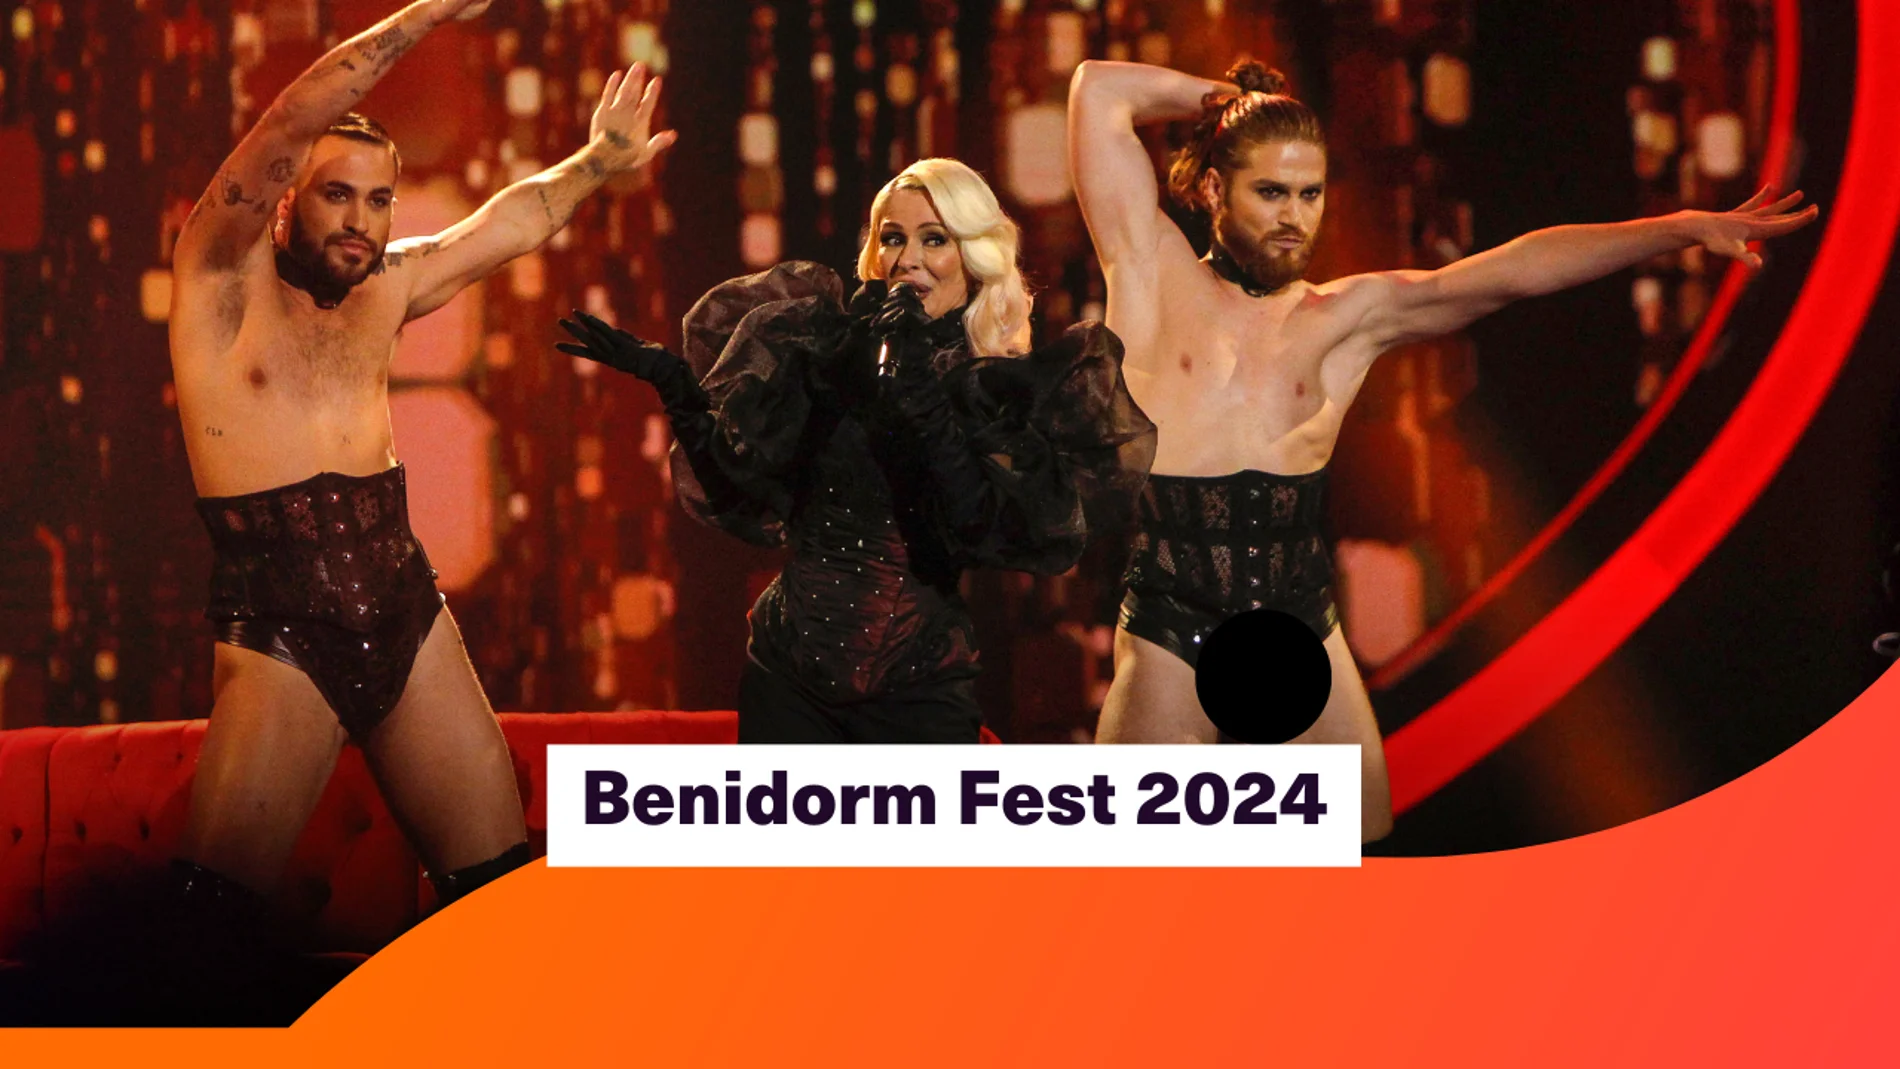 Nebulossa – “Zorra”, Benidorm Fest 2024, La Gran Final